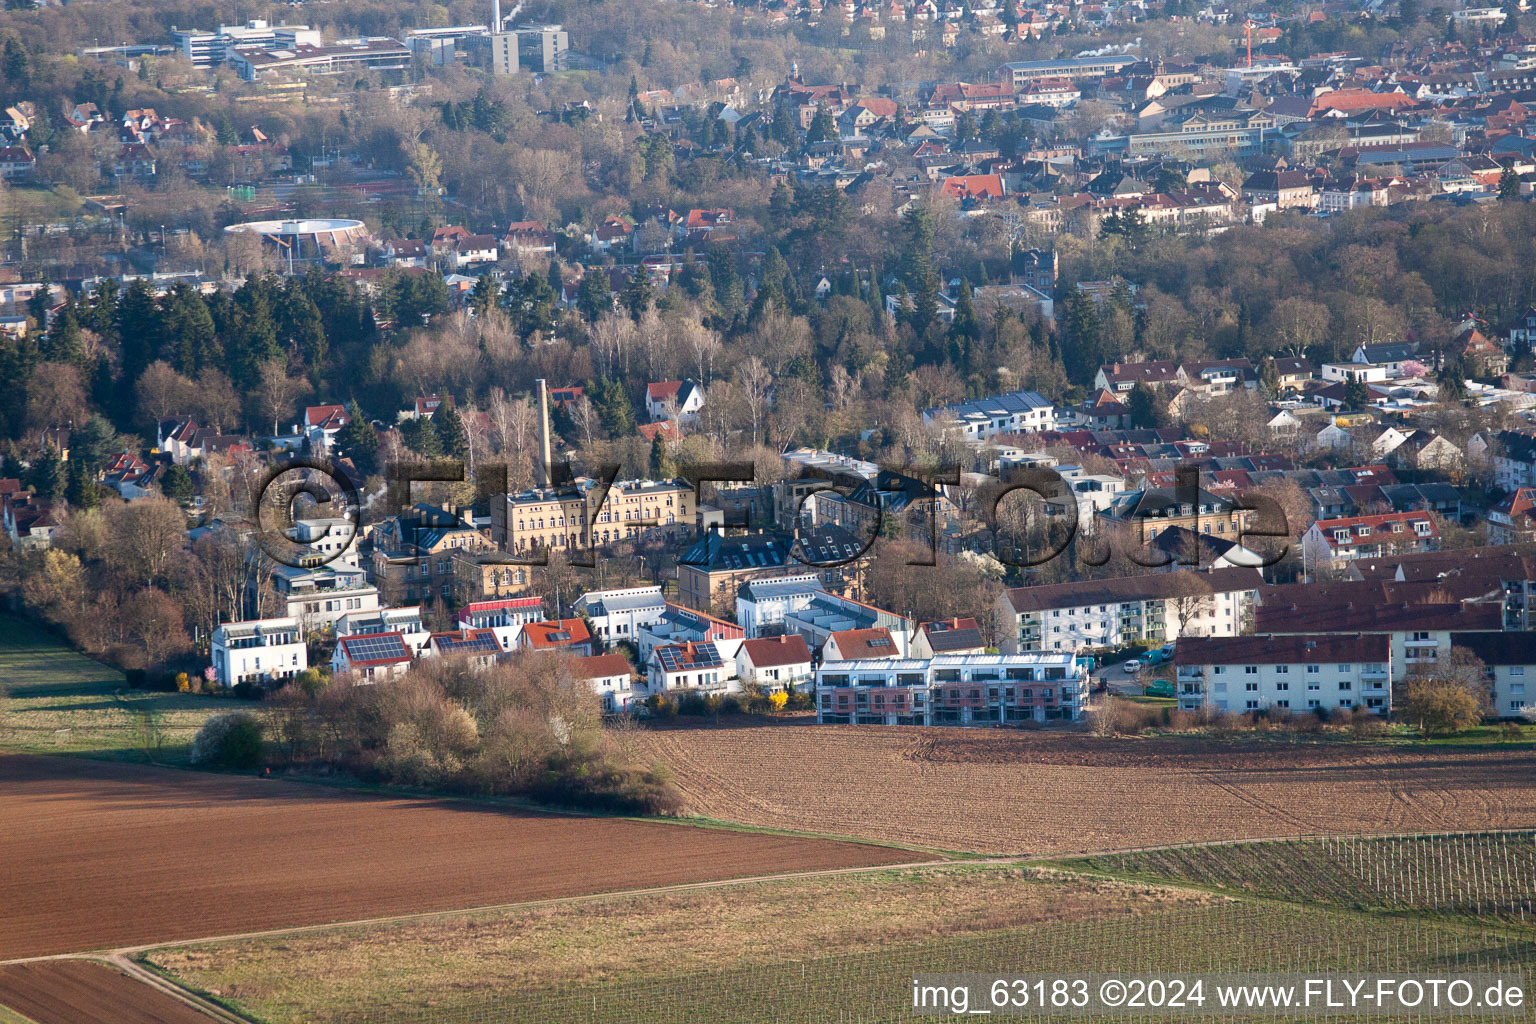 Wollmesheimer Höhe in Landau in der Pfalz in the state Rhineland-Palatinate, Germany from the plane